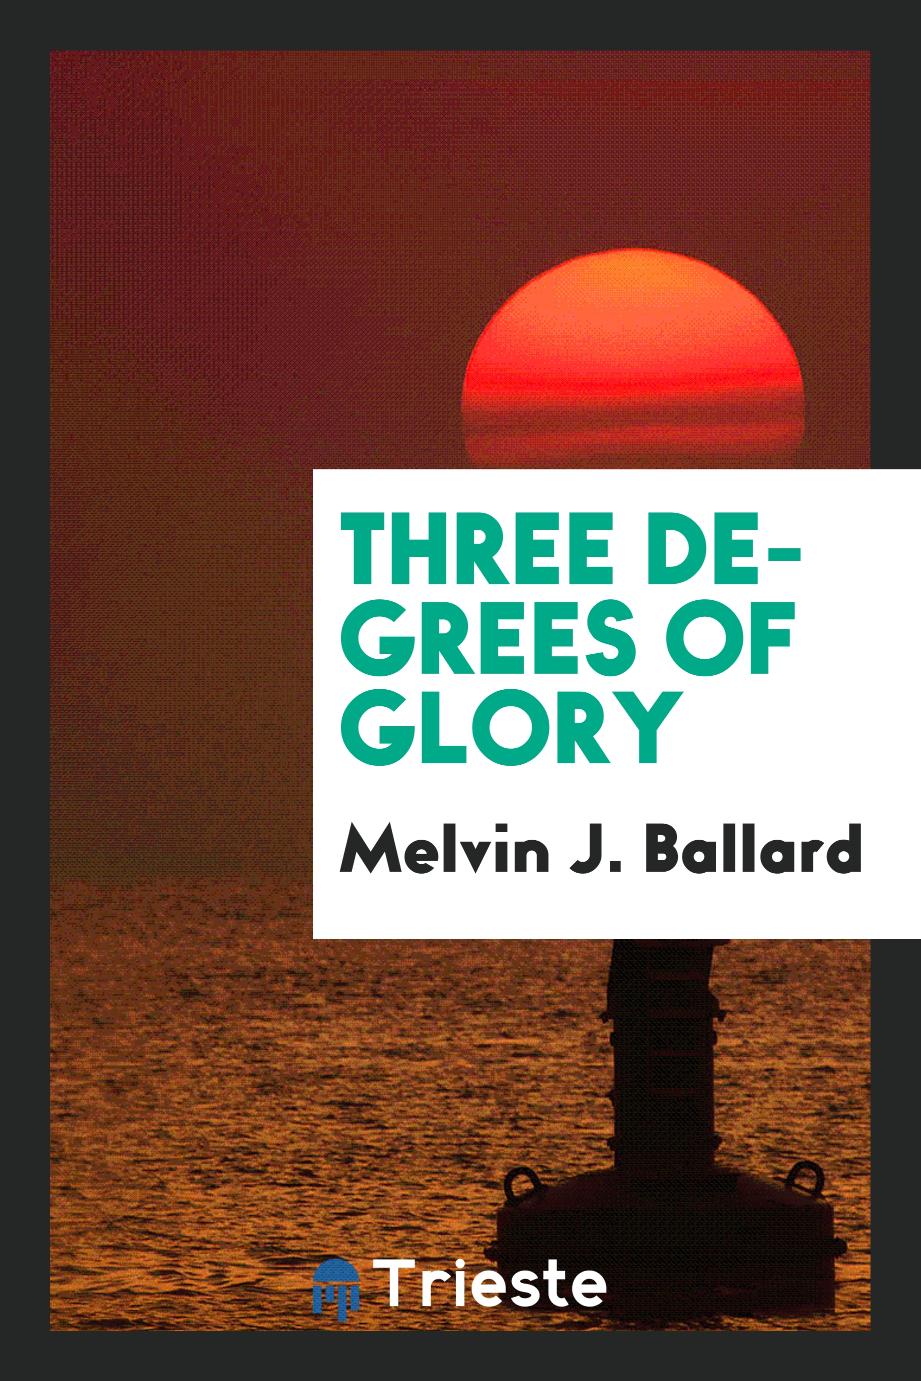 Three degrees of glory